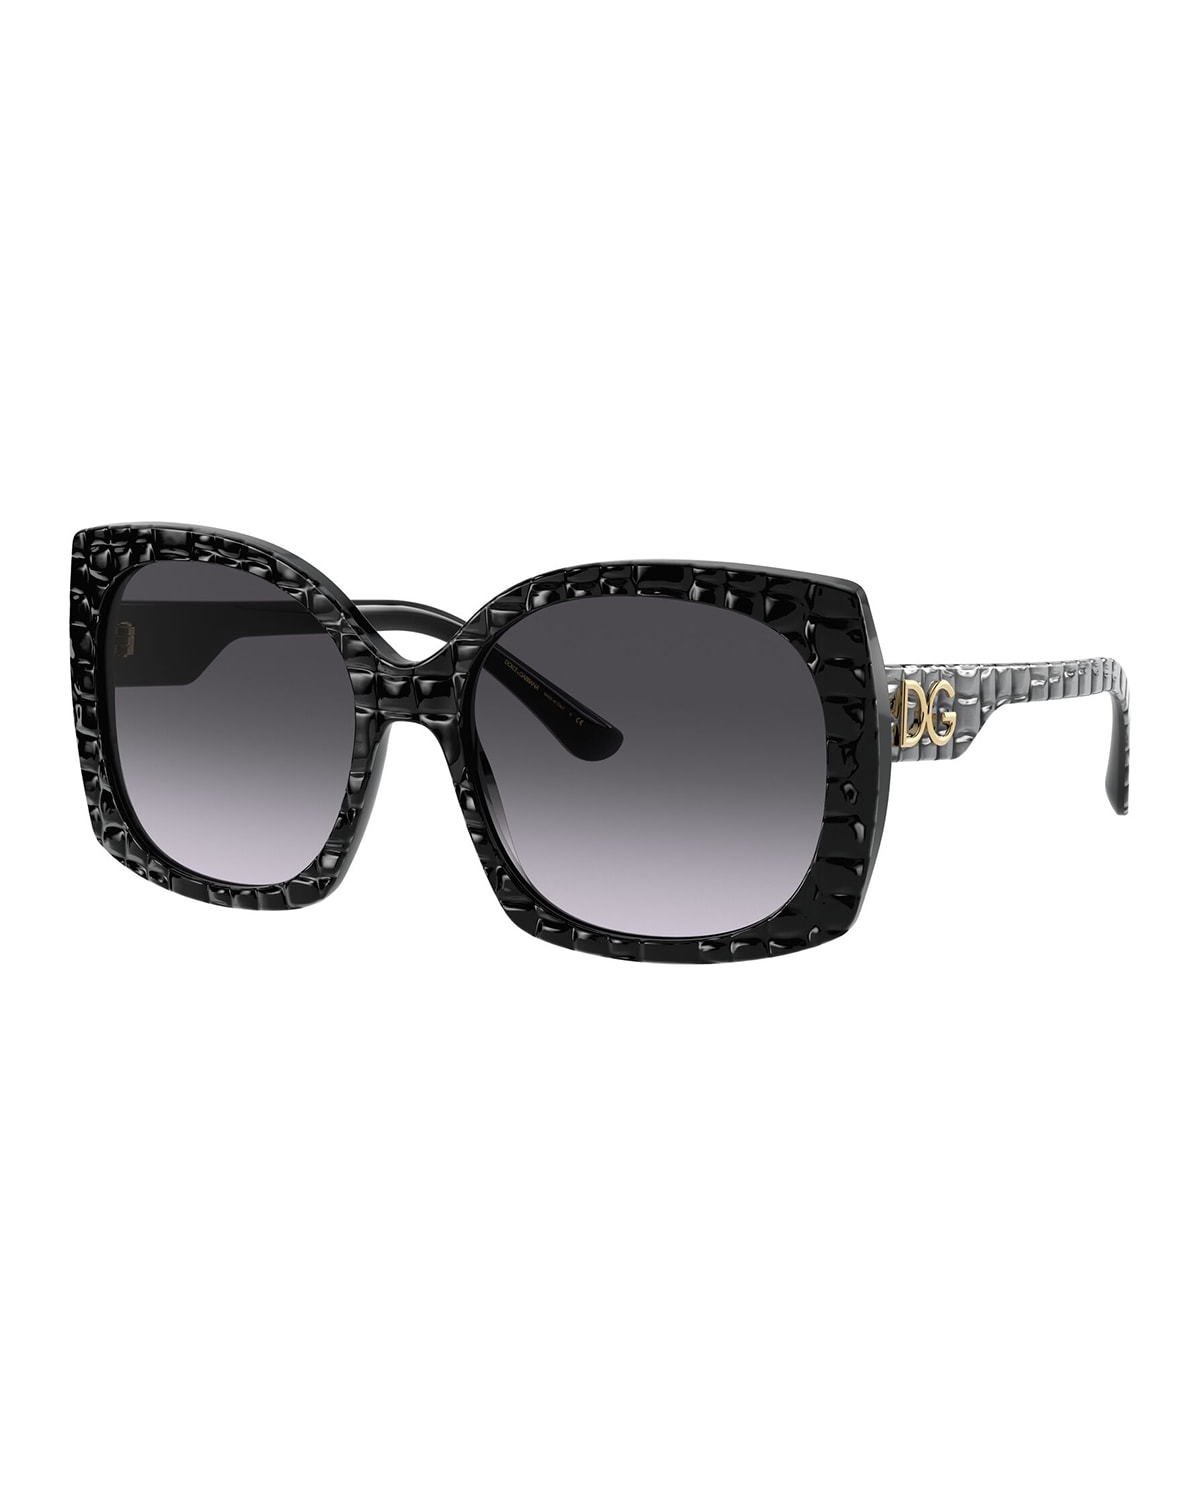 Women DG Eyewear Rectangular Rhinestones Sunglasses 398 Buy 1 get 1 Black Free 